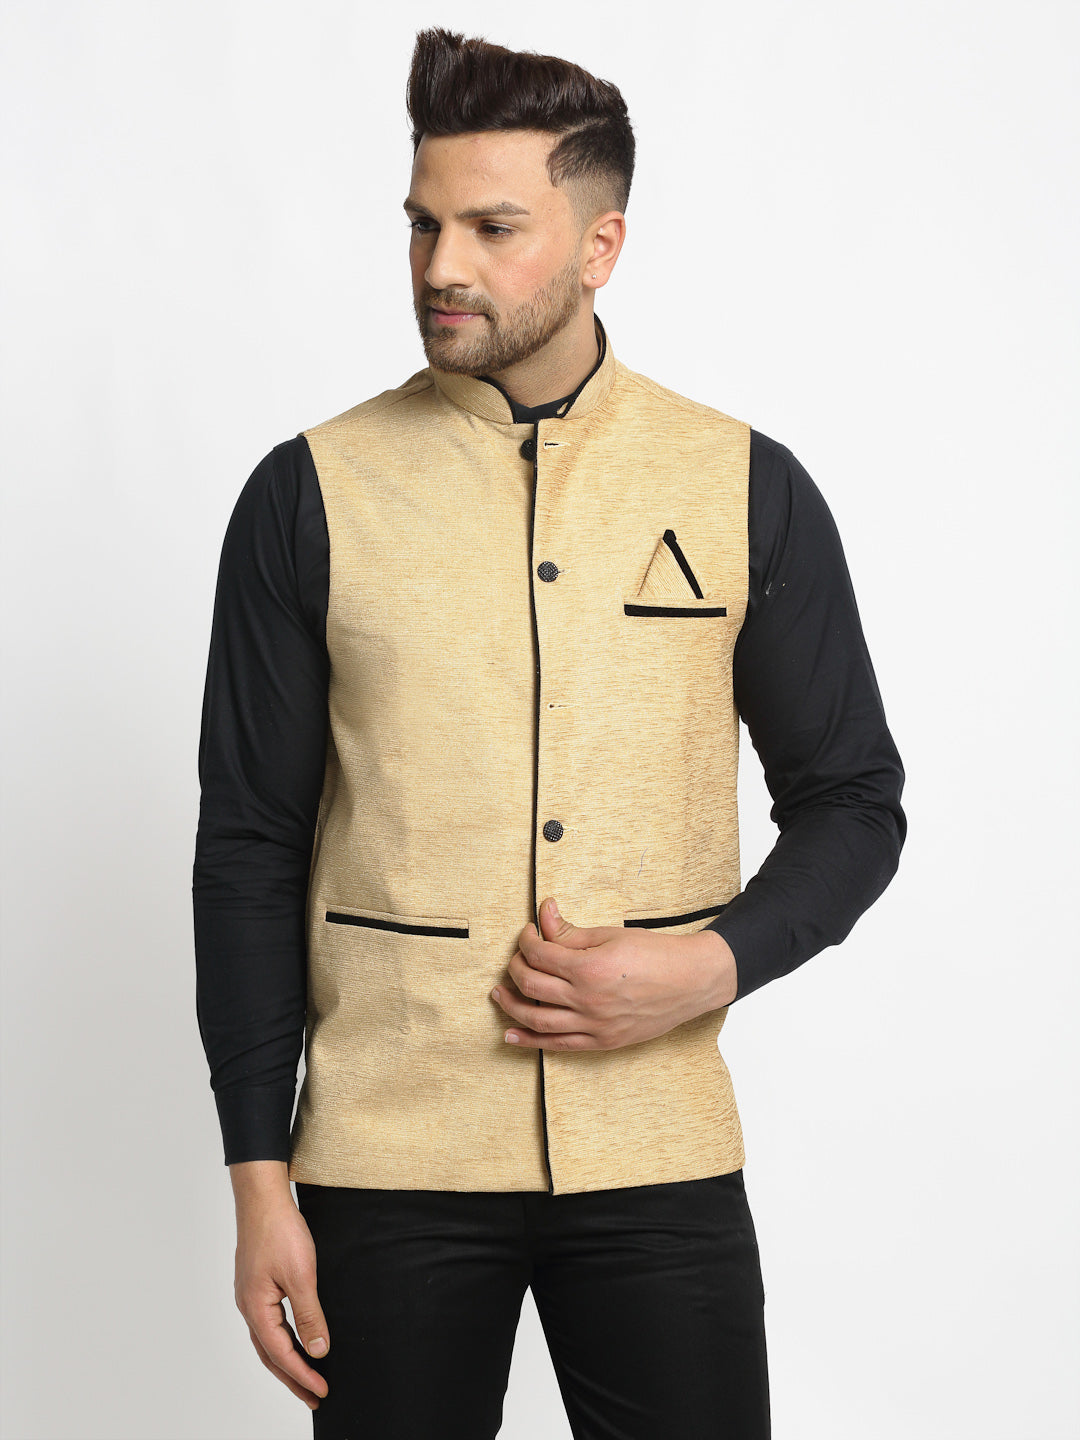 Jompers Men's Beige Solid Nehru Jacket with Square Pocket